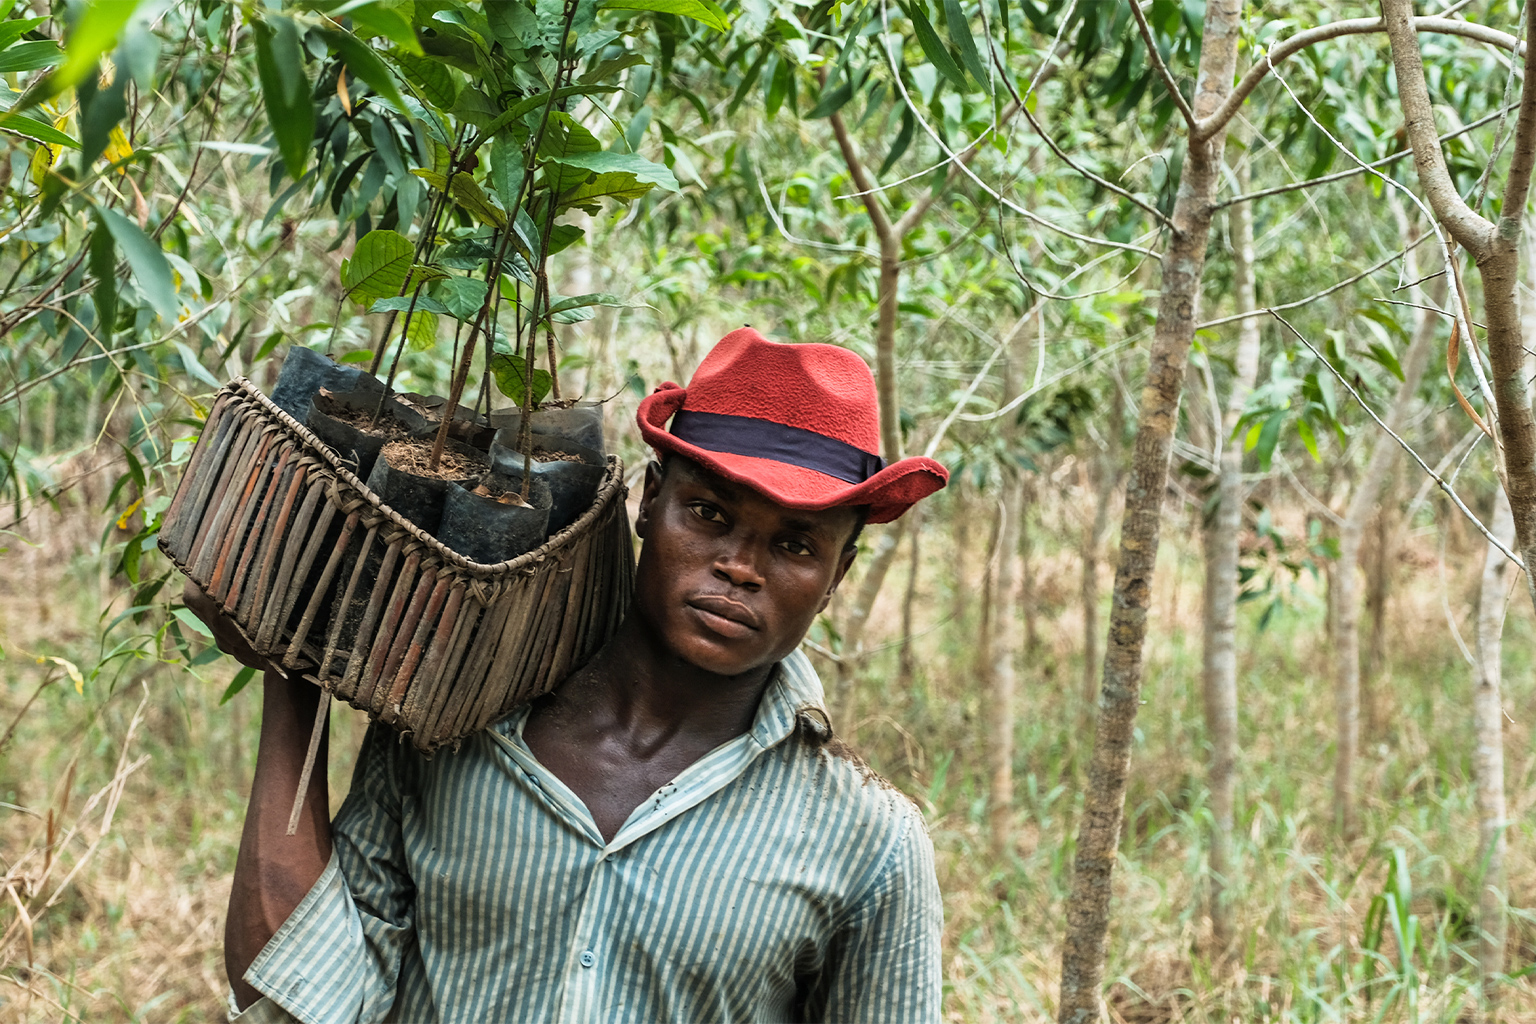 A restoration practitioner plants native tree species within a tree plantation in Yangambi, Democratic Republic of Congo.